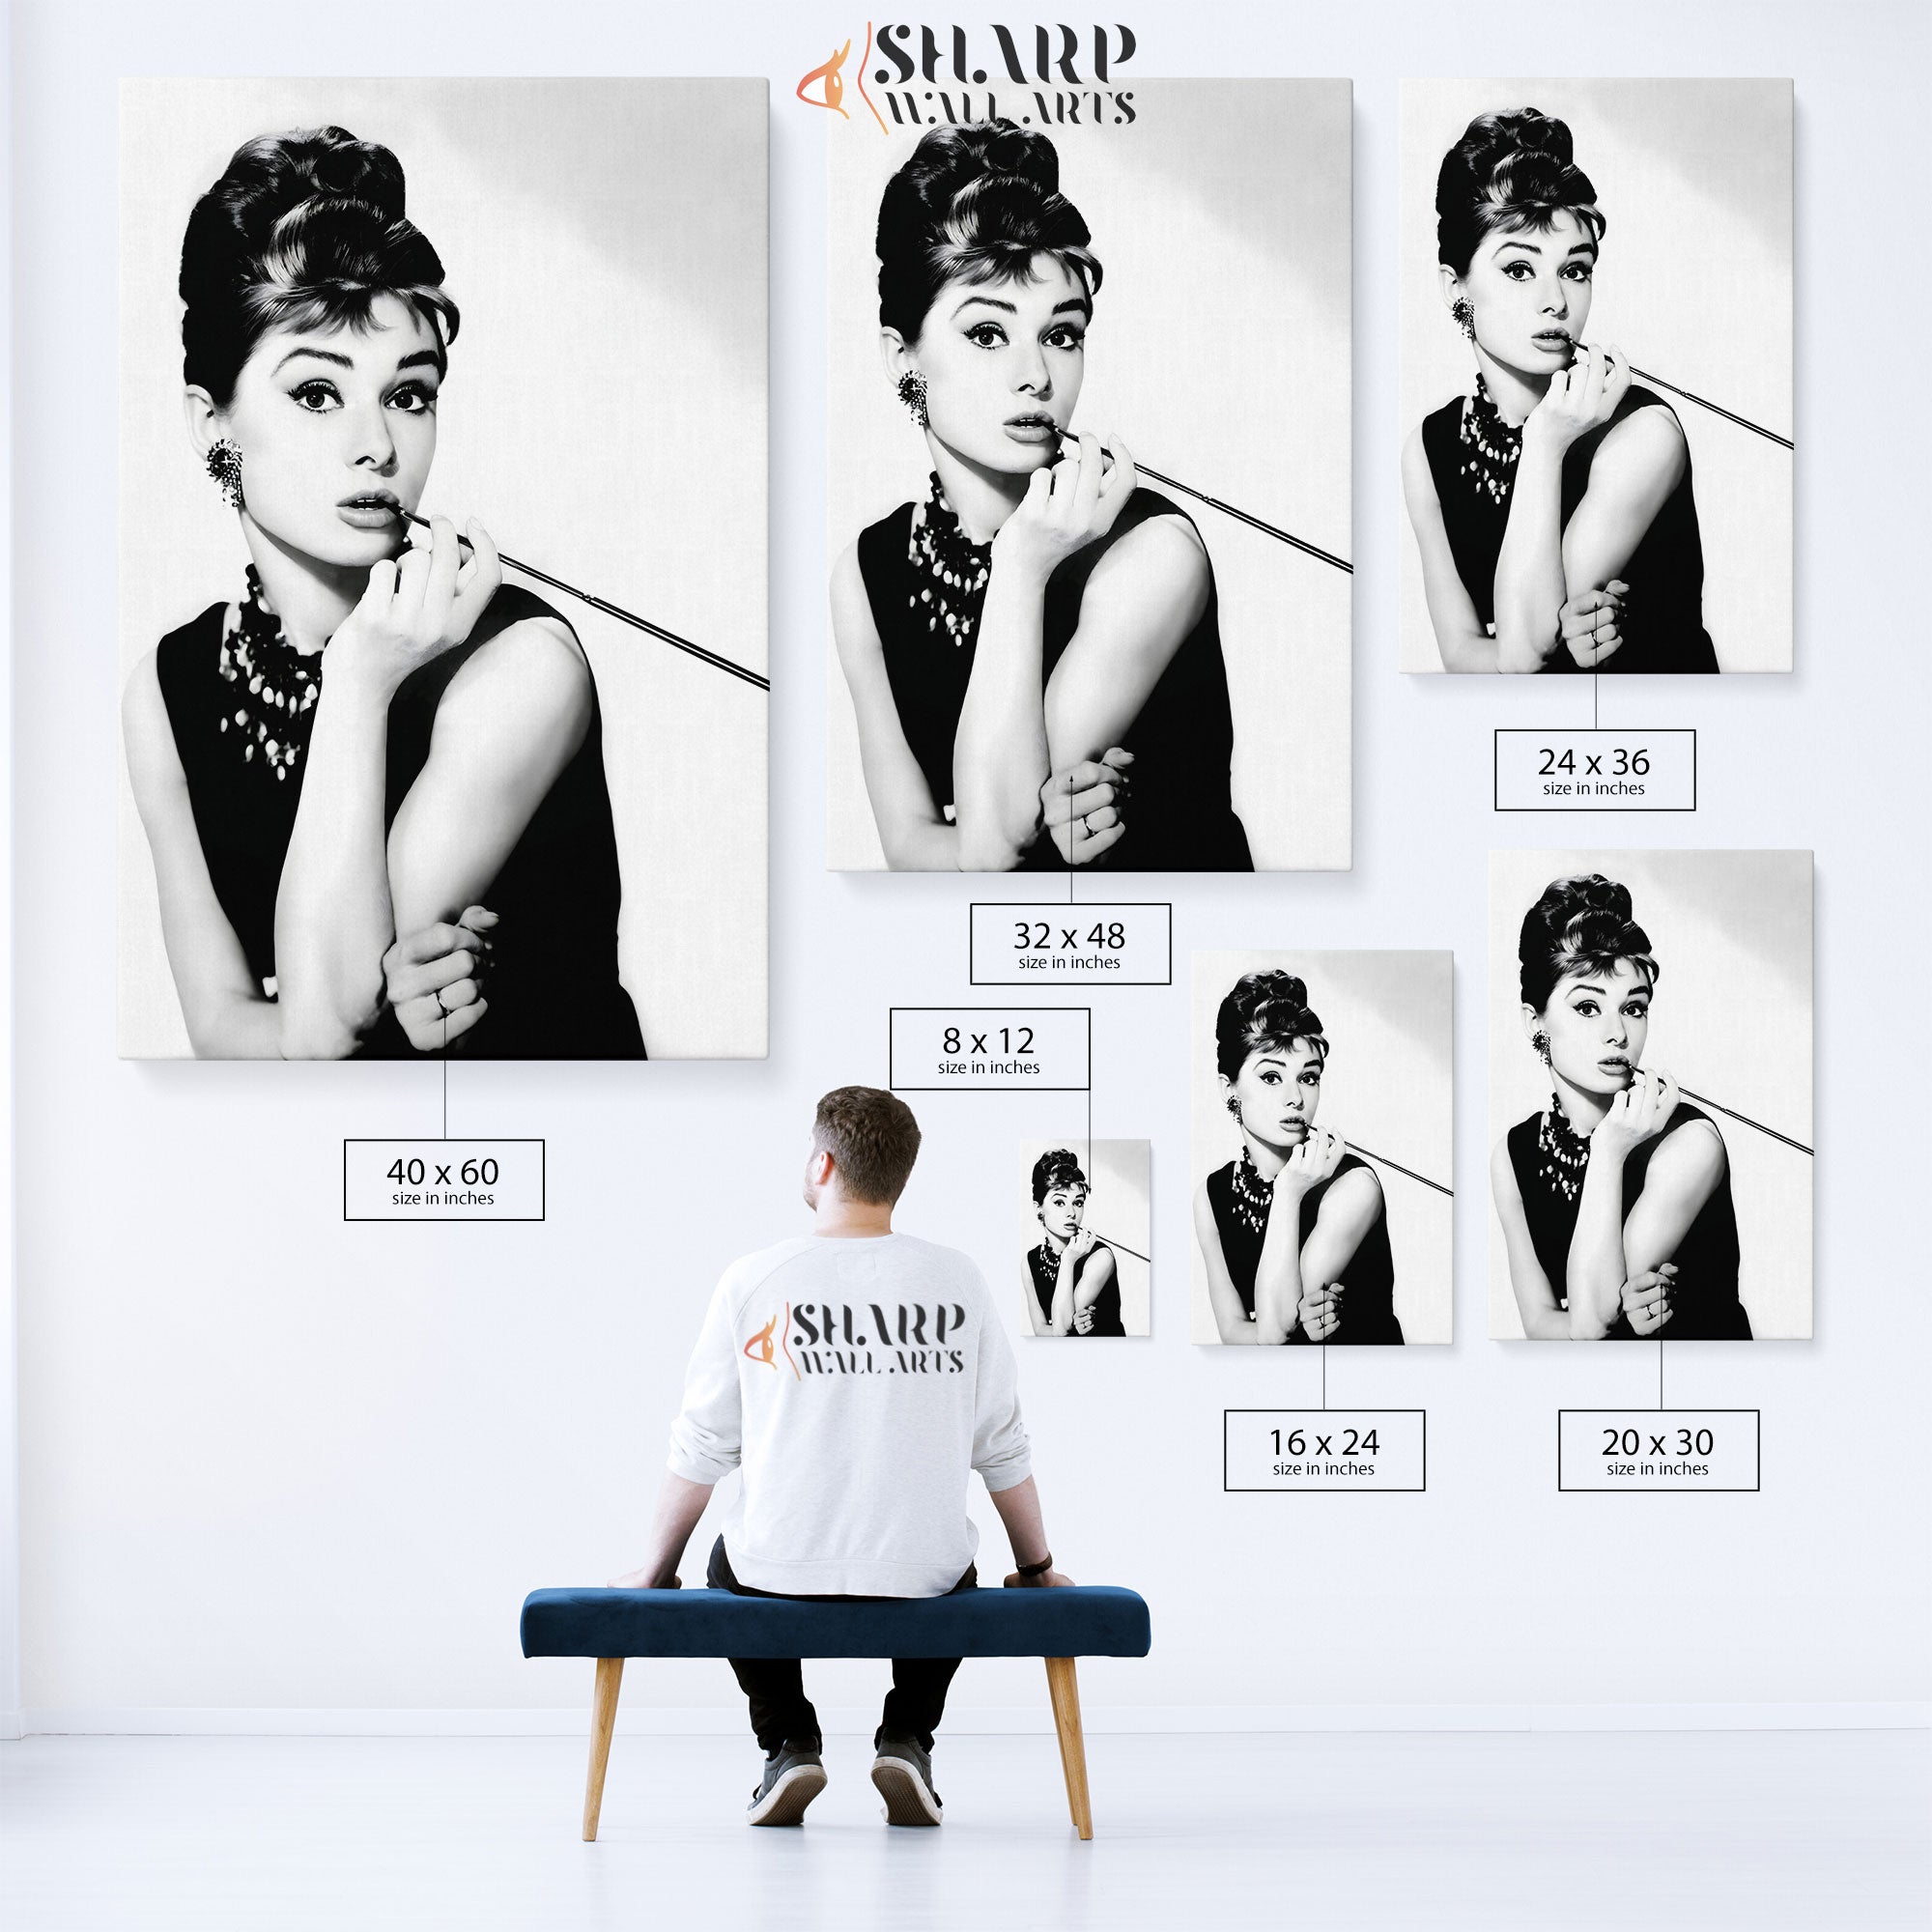 Audrey Hepburn With Cigarette Wall Art Canvas